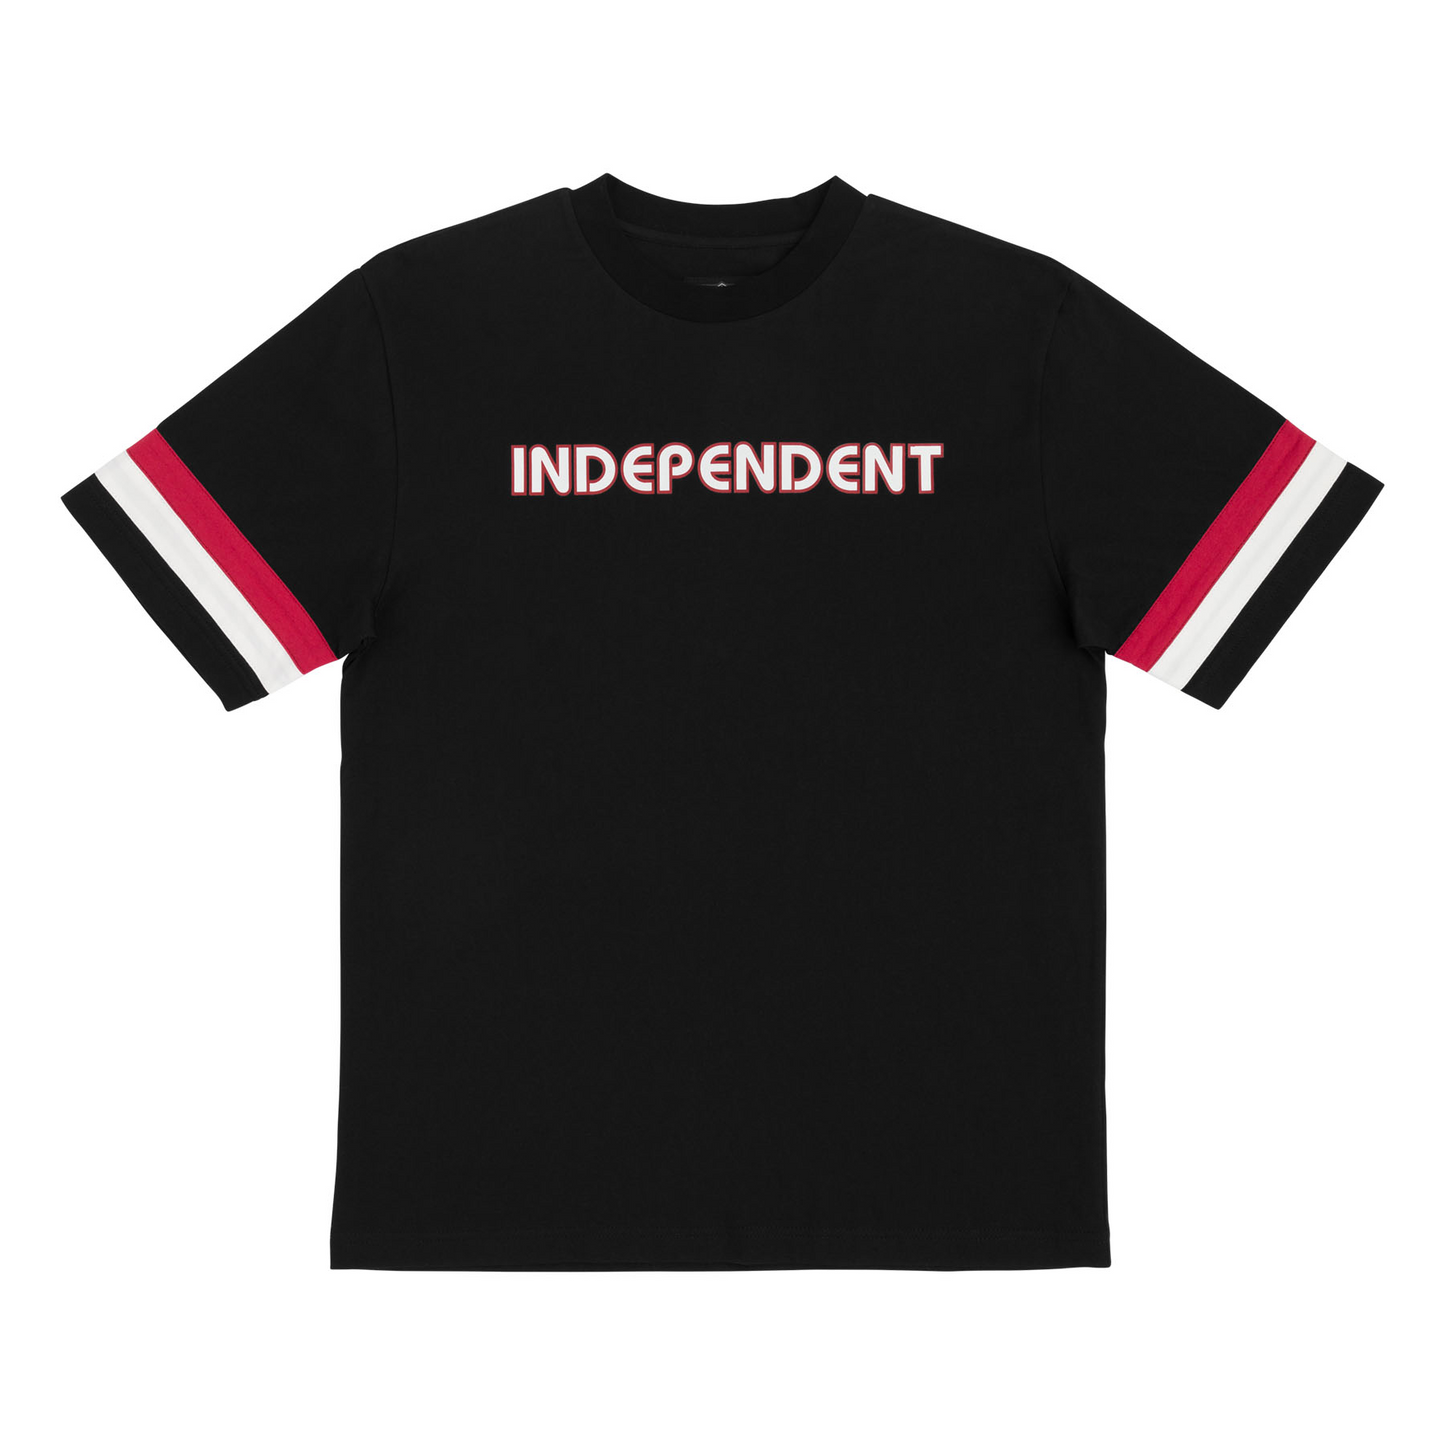 Independent Trucks Bauhaus Jersey Top Shirt - Black